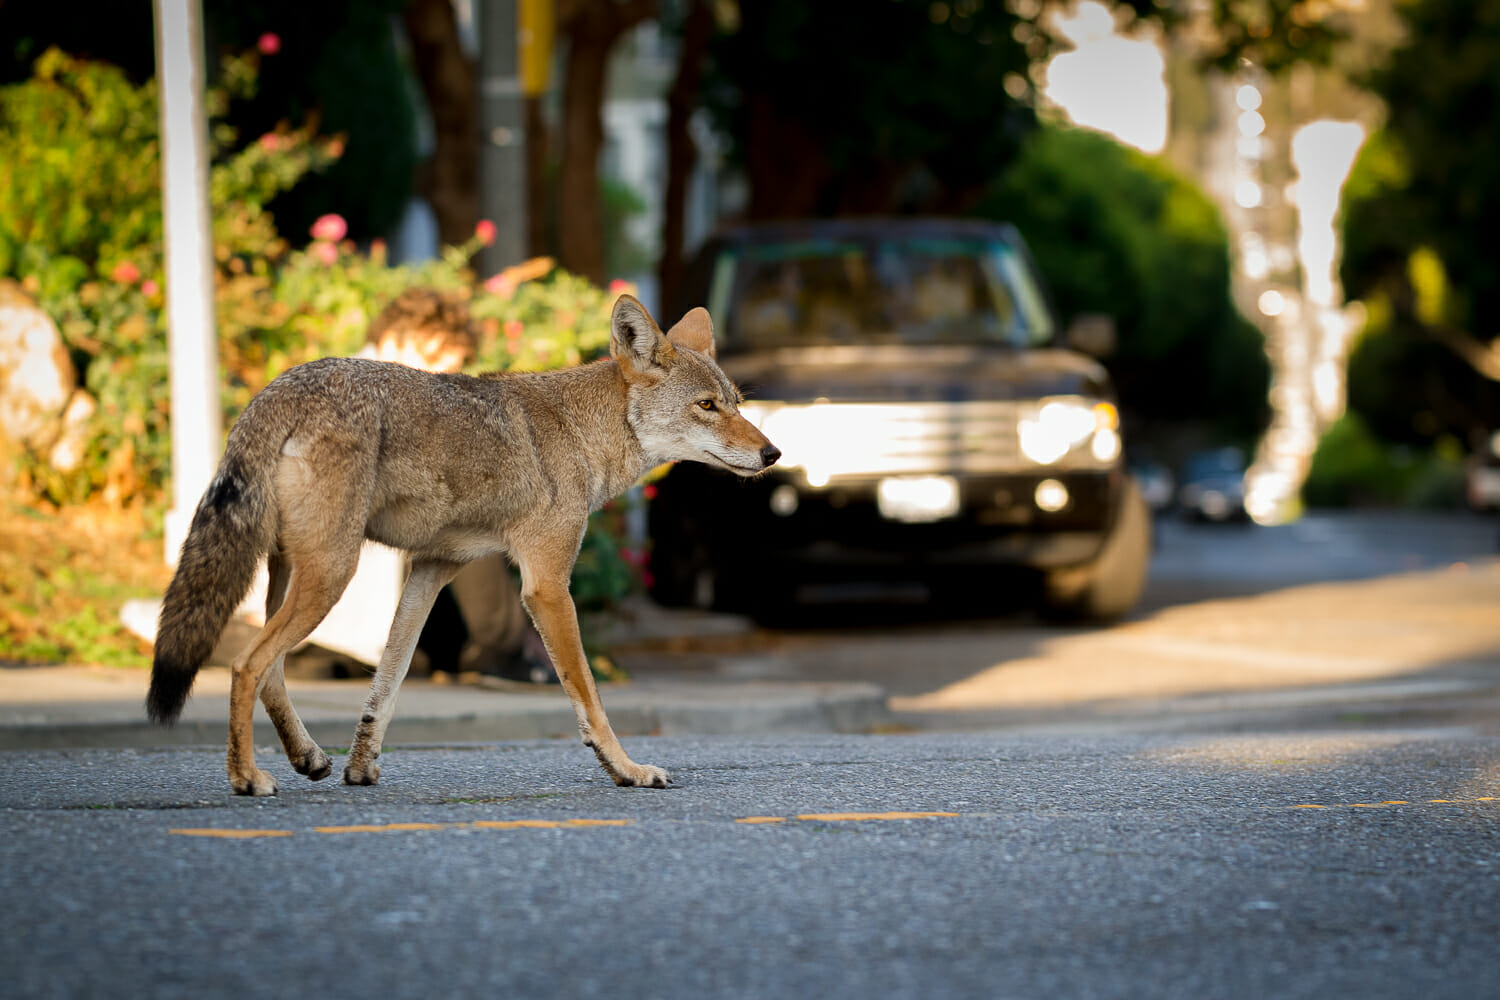 urban coyote trotting down a street